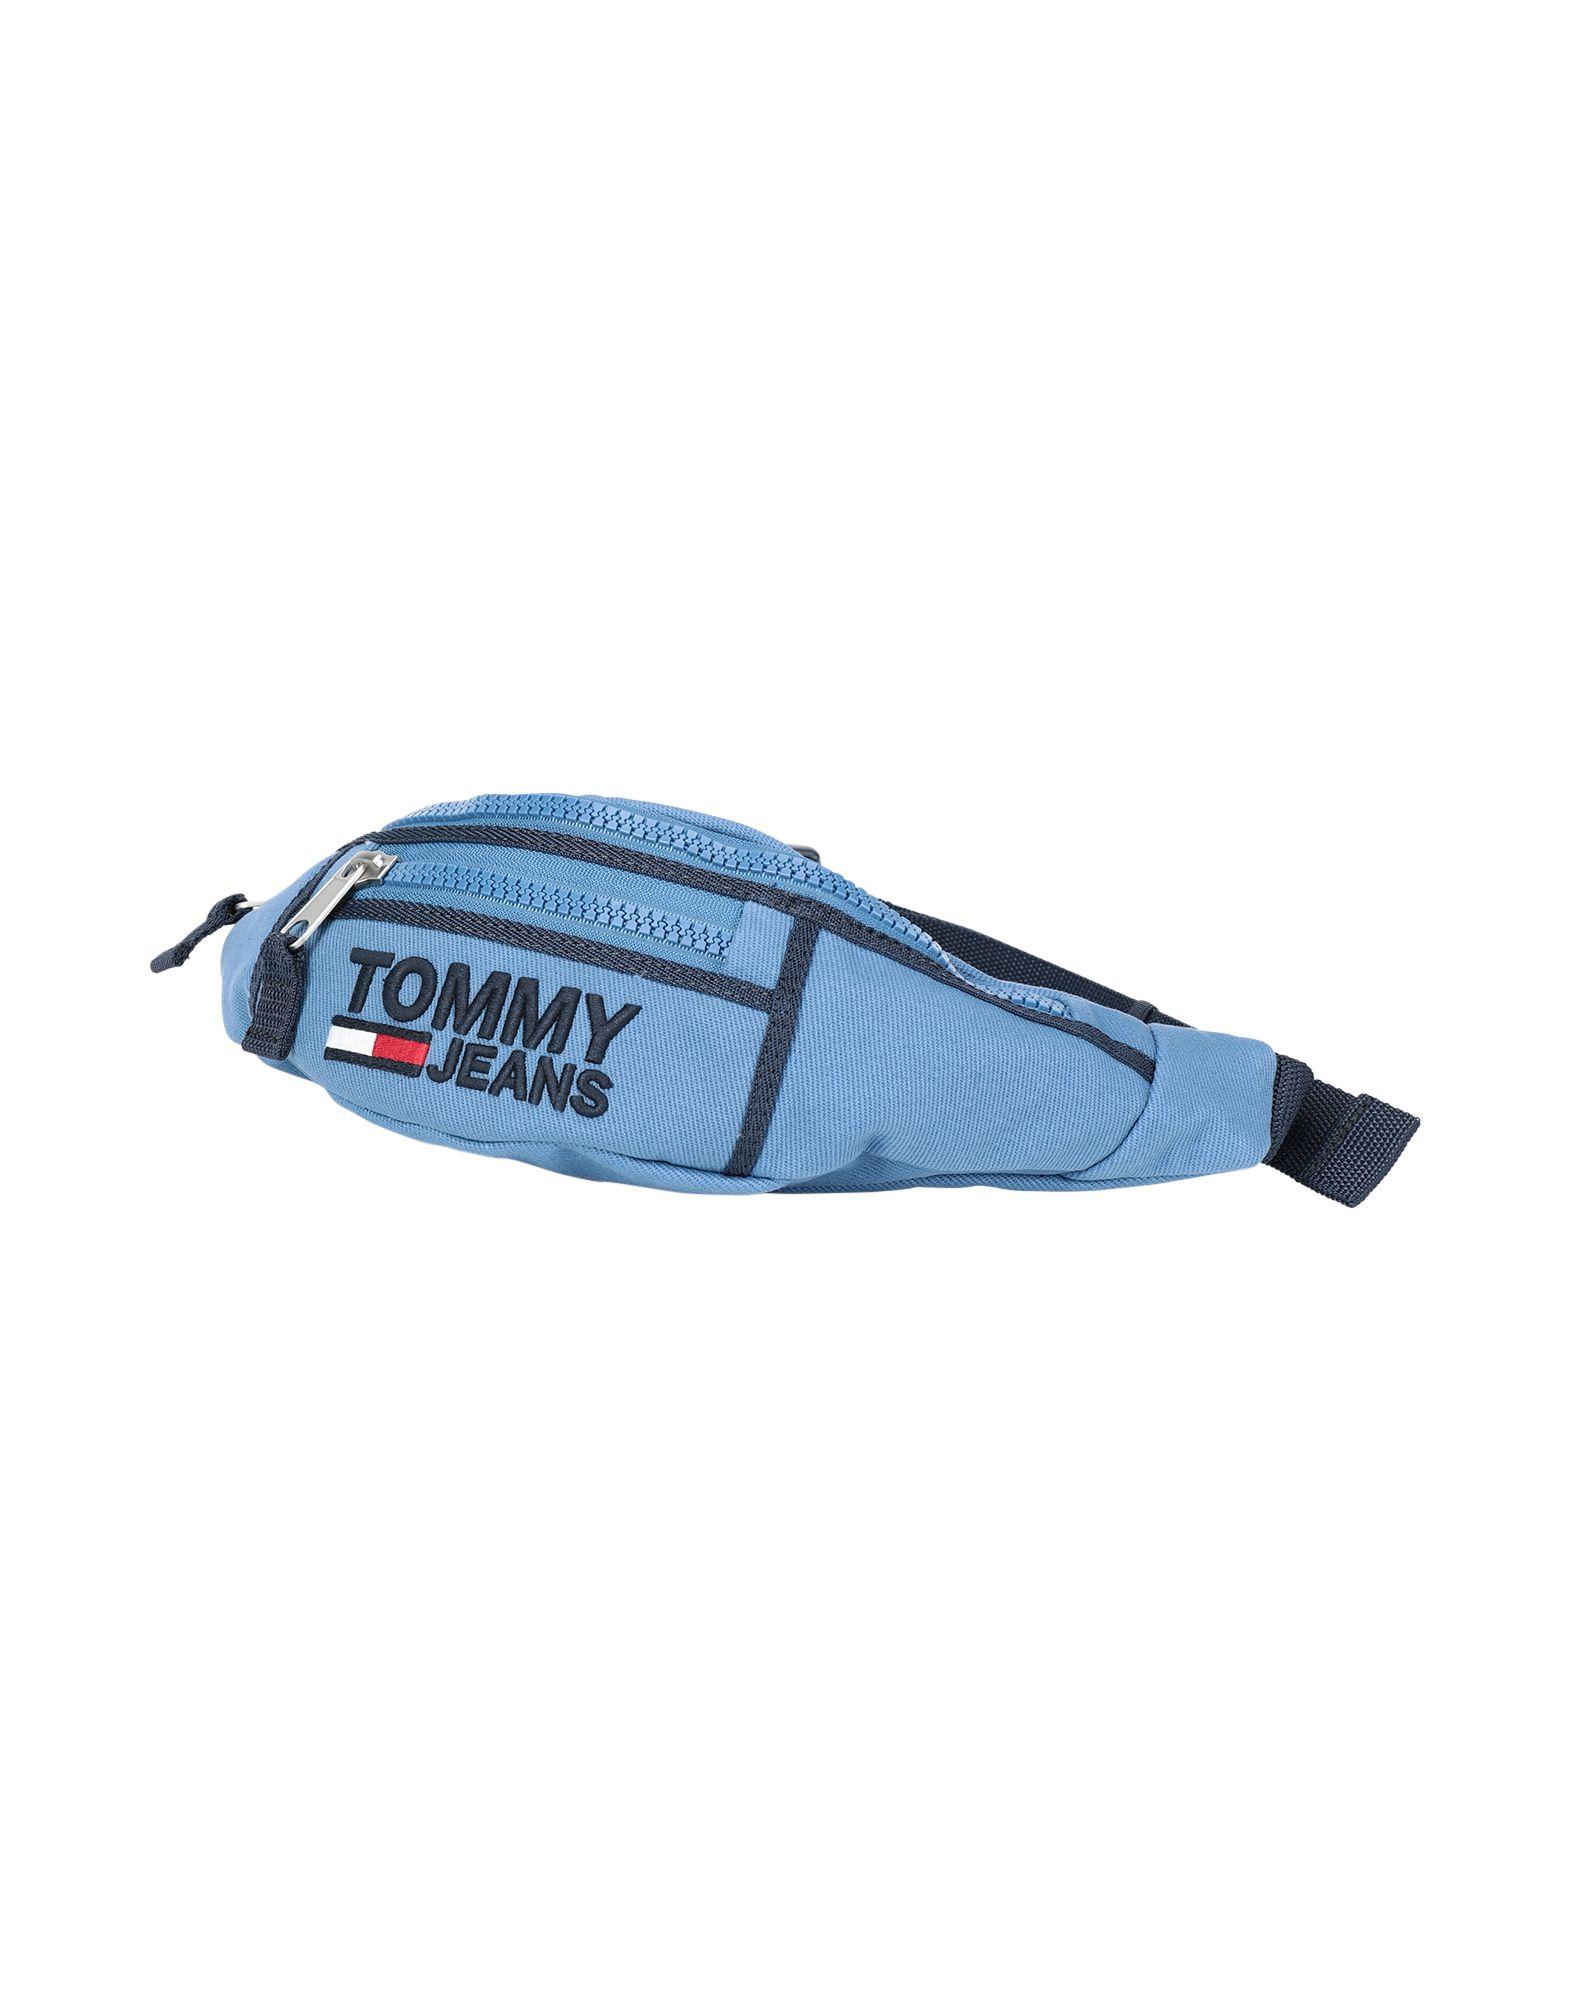 Tommy Hilfiger Cotton Bum Bag in Azure (Blue) for Men - Lyst